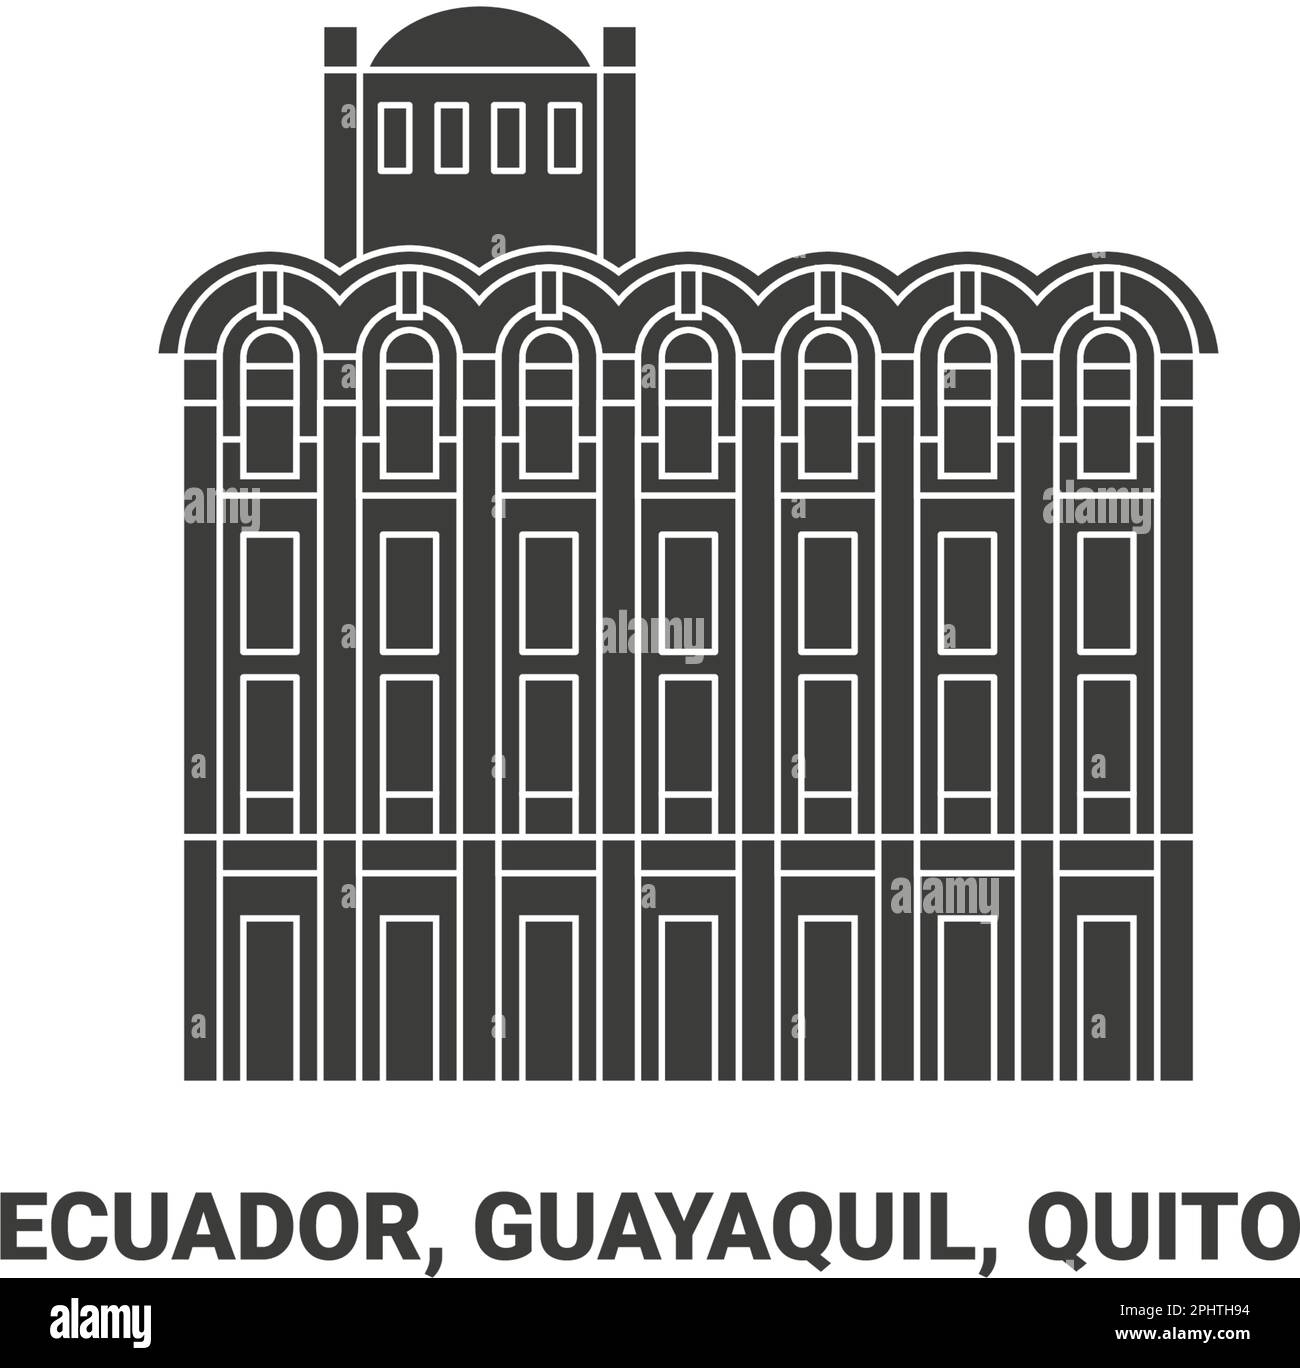 Ecuador, Guayaquil, Quito travel landmark vector illustration Stock Vector